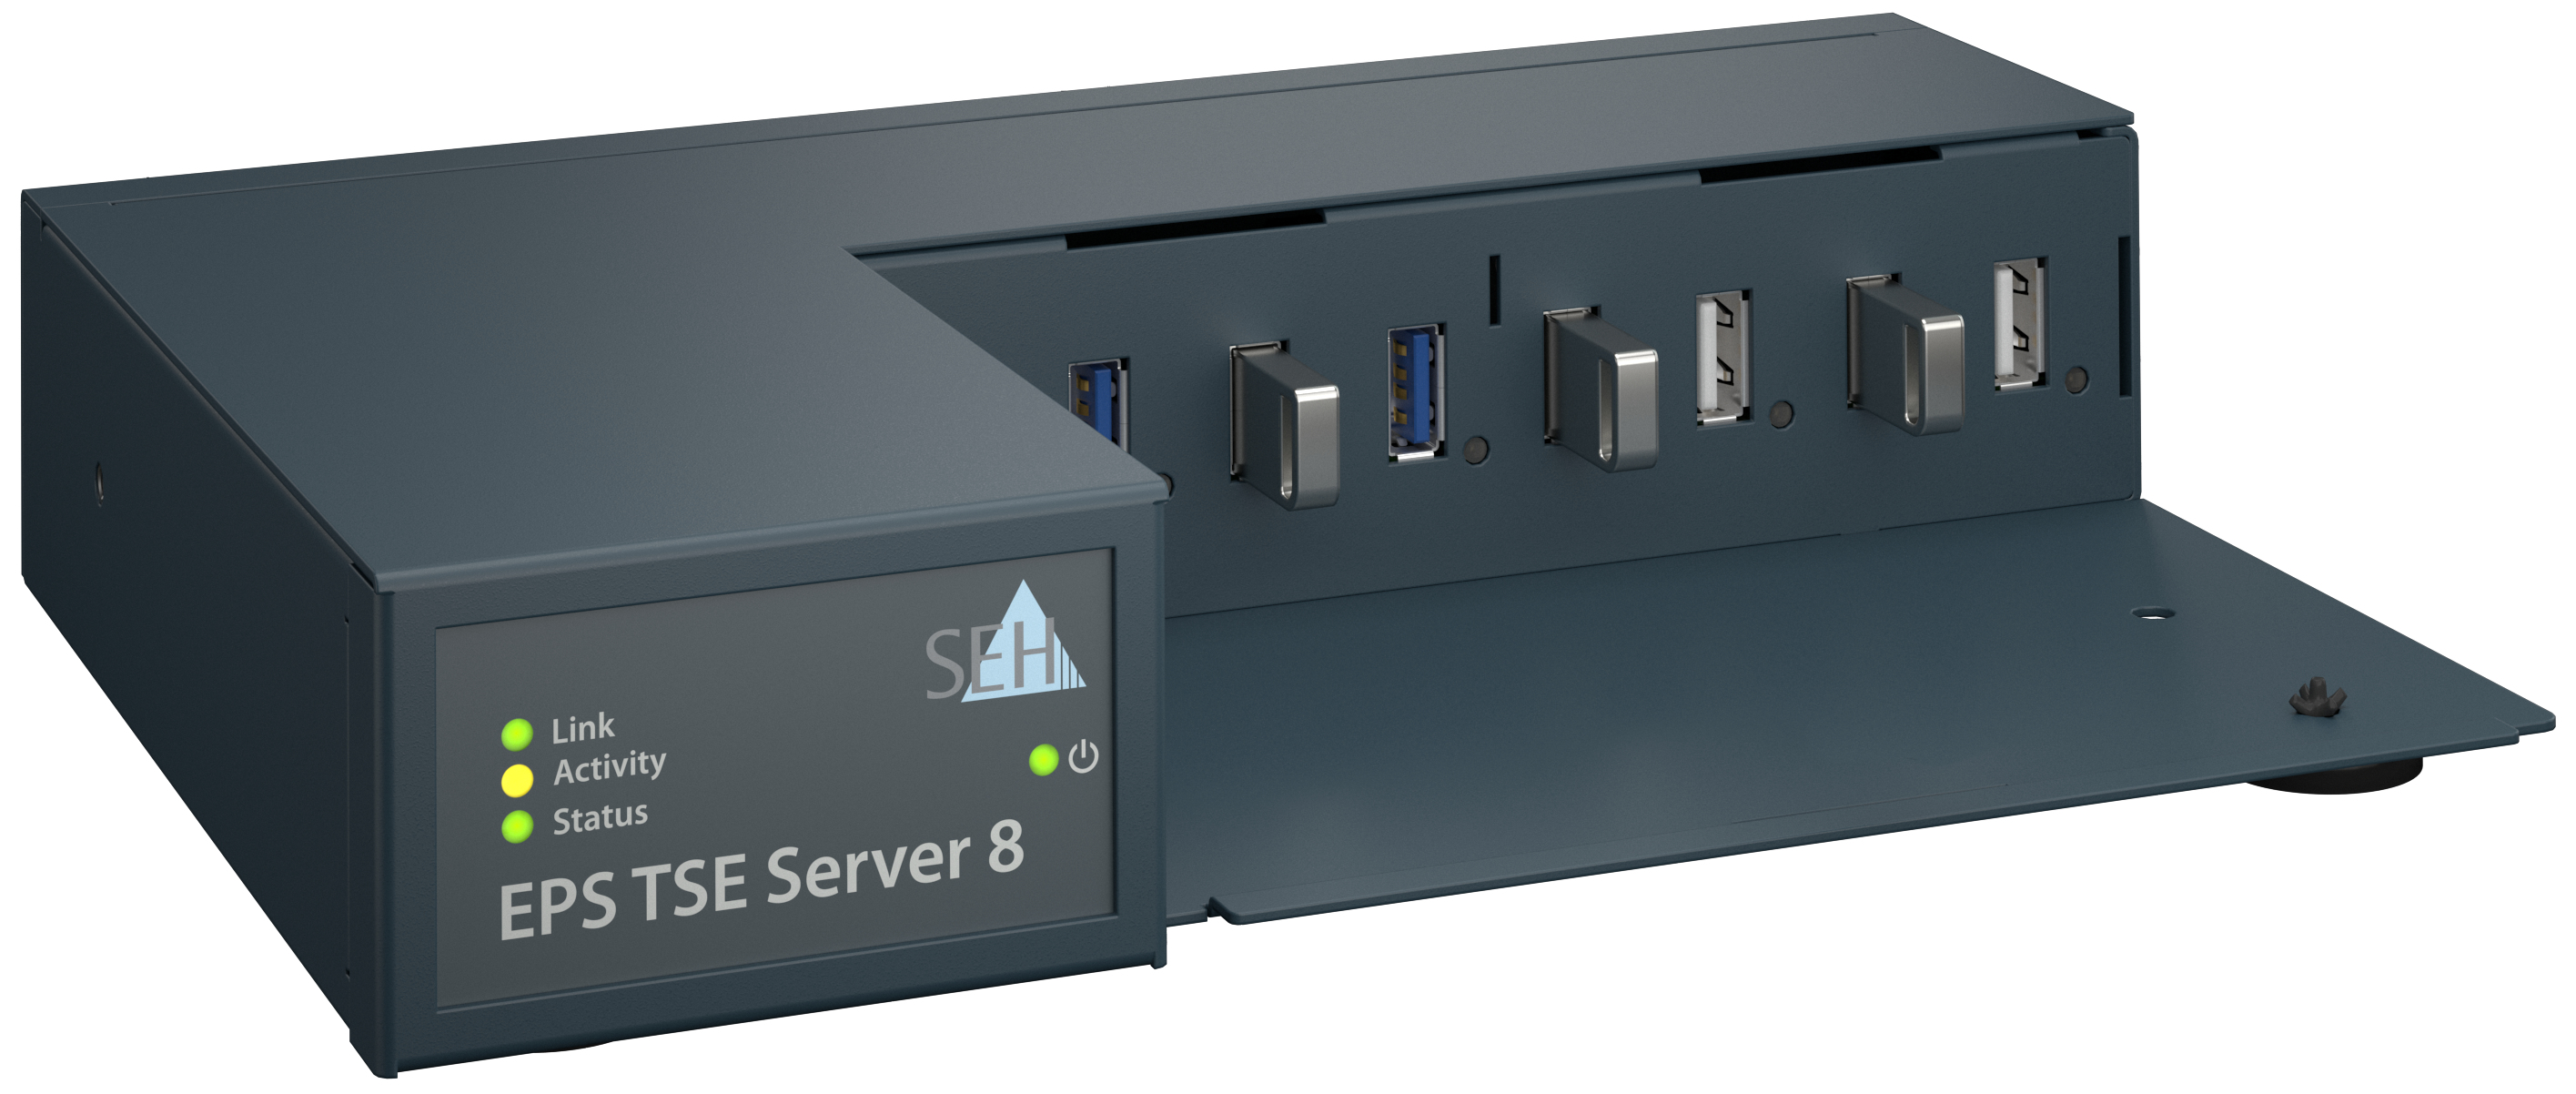 Epson Fiscal Server for Germany (EPS TSE Server 8) - Deutschland - USB Typ-A - 222 mm - 280 mm - 62 mm - 1,58 kg